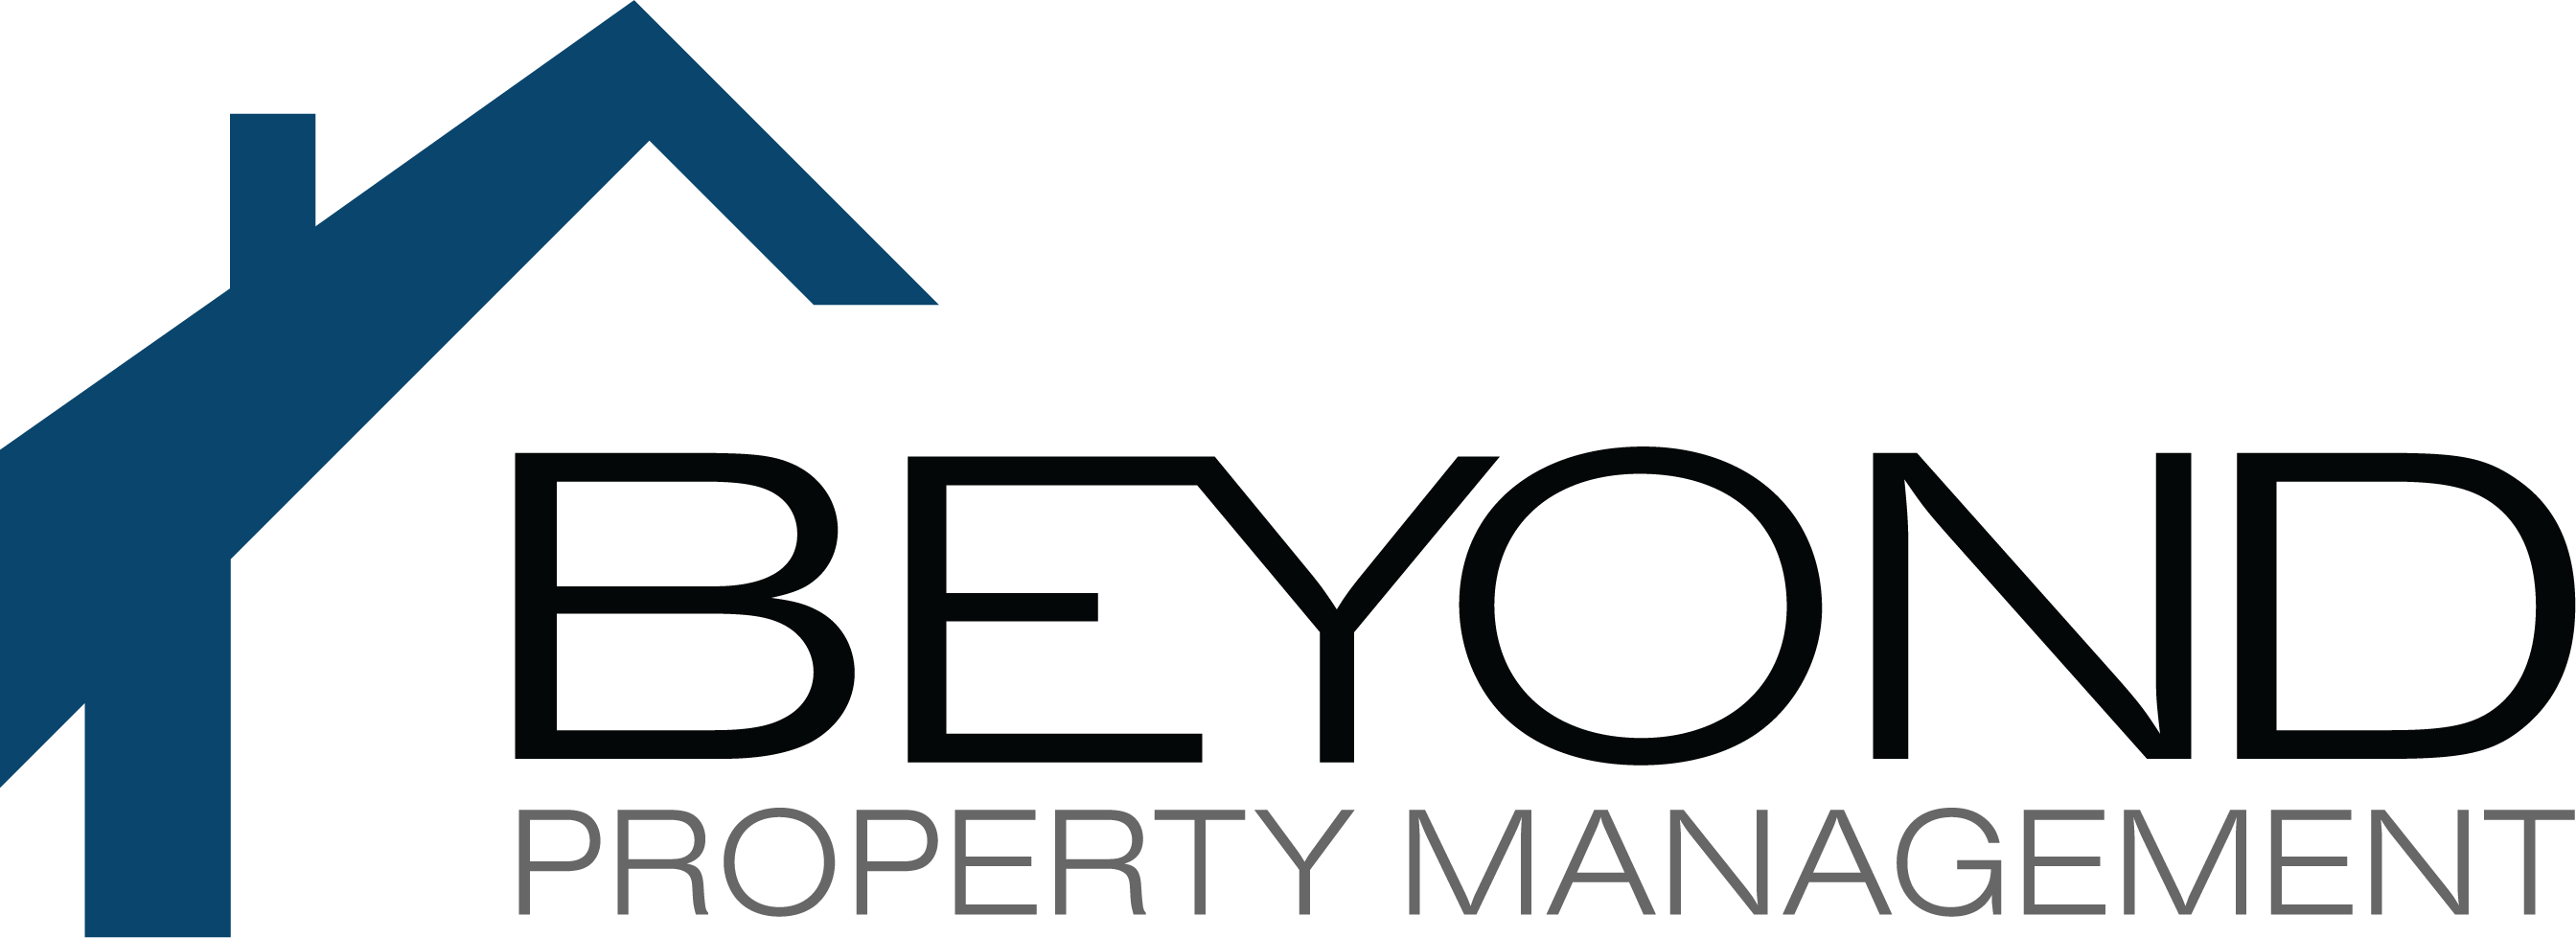 key clipart property management